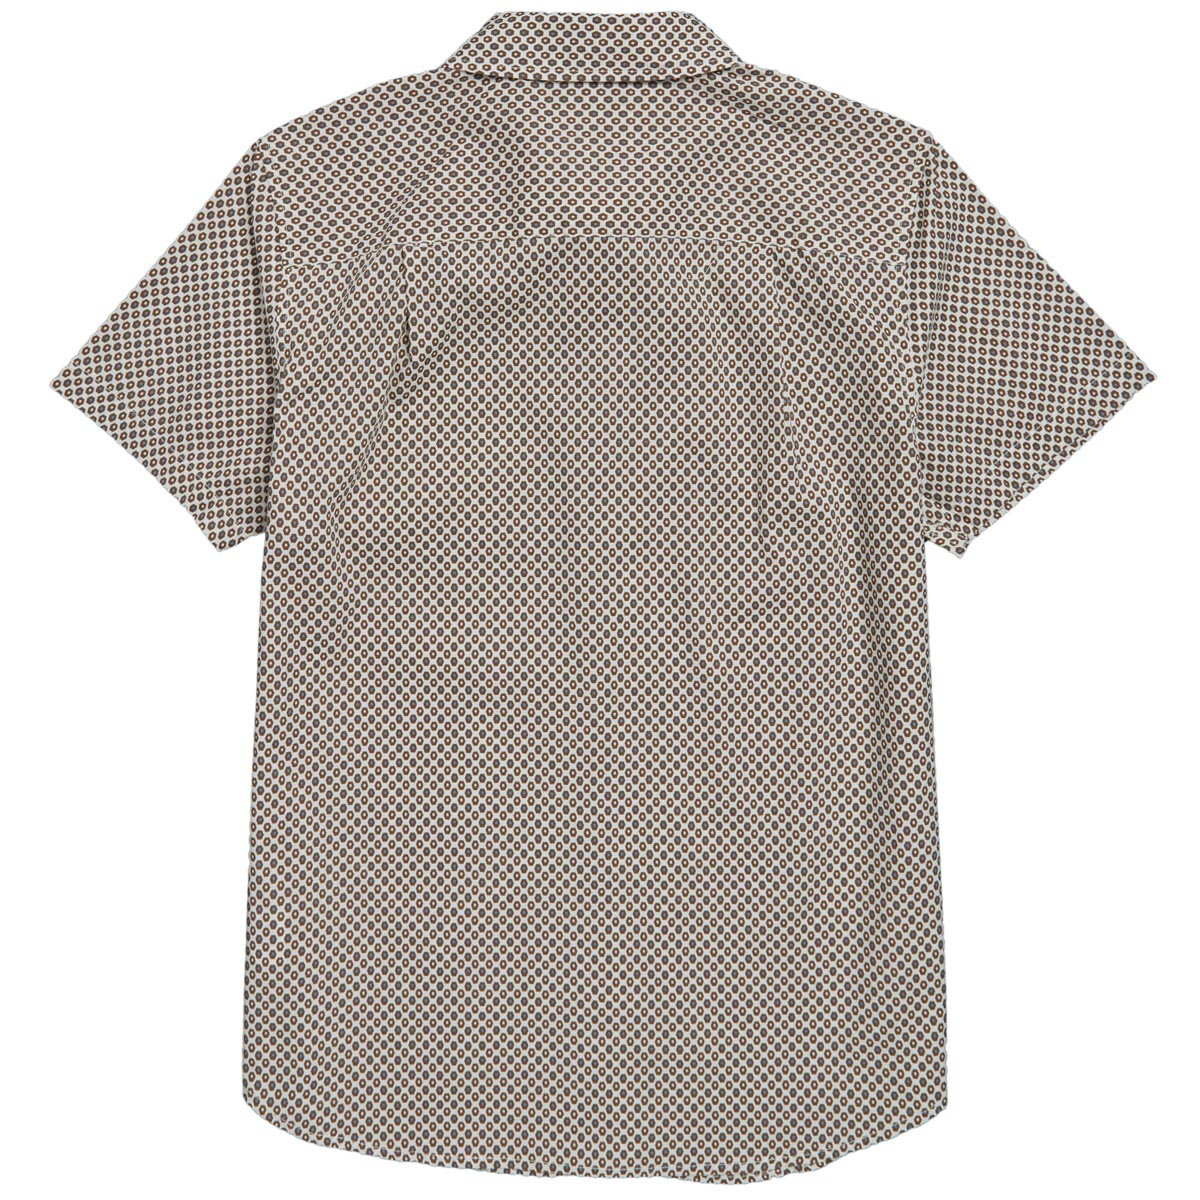 Brixton Charter Shirt - White Geo Dot image 2